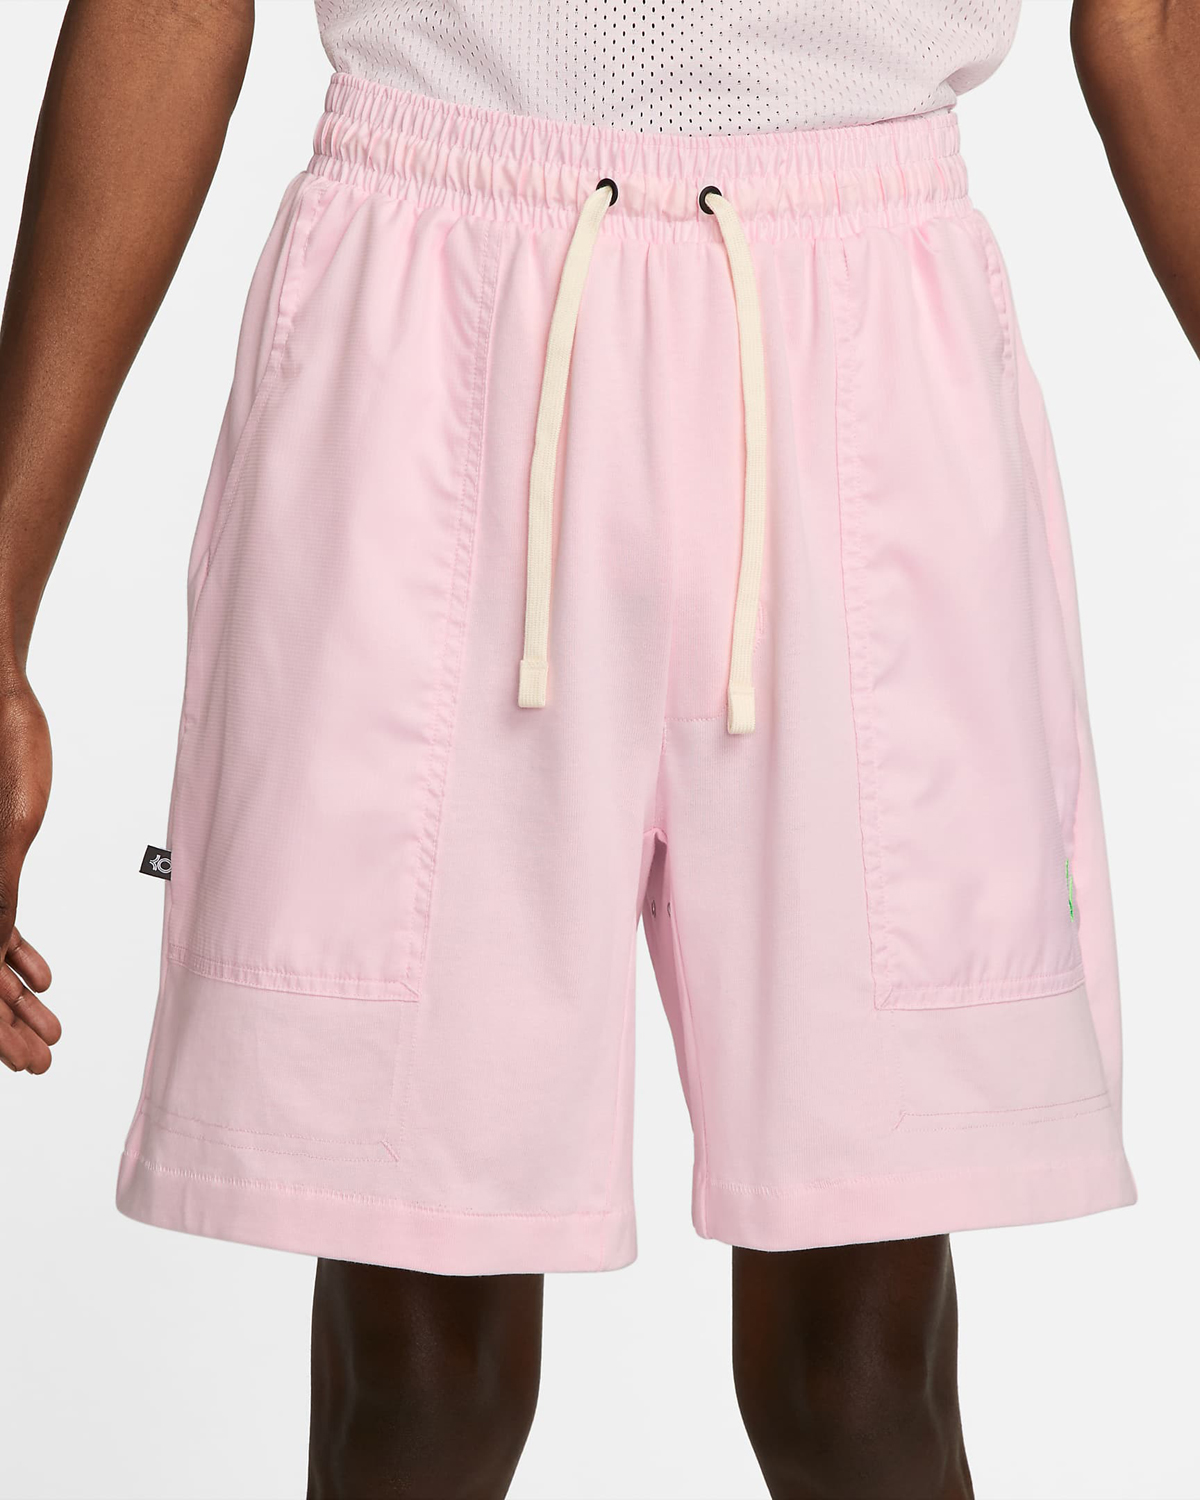 Nike-KD-Kevin-Durant-Fleece-Basketball-Shorts-Pink-Foam-1